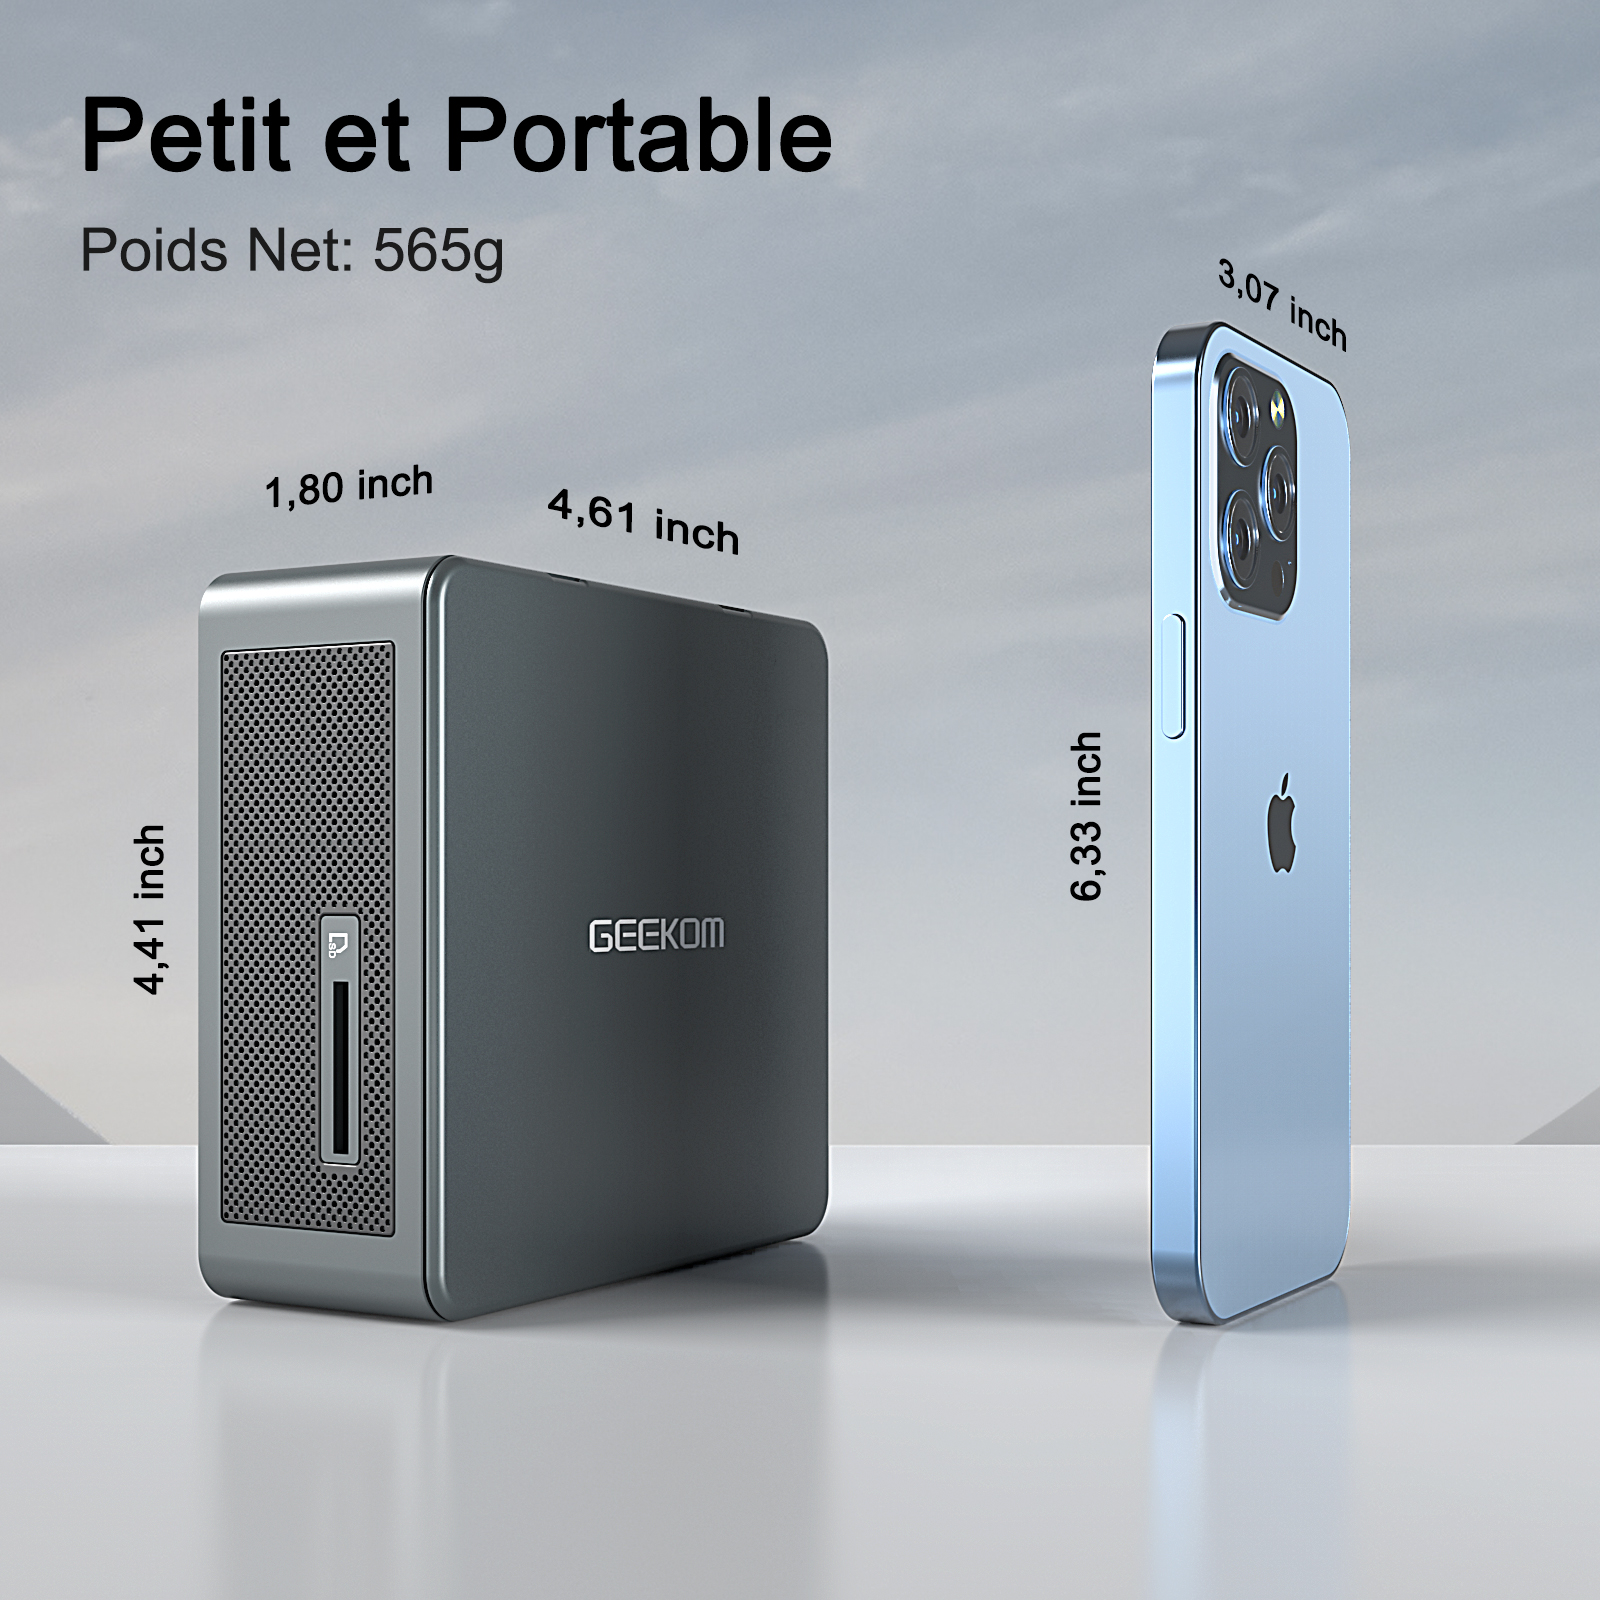 GEEKOM Mini IT11-Petit et portable